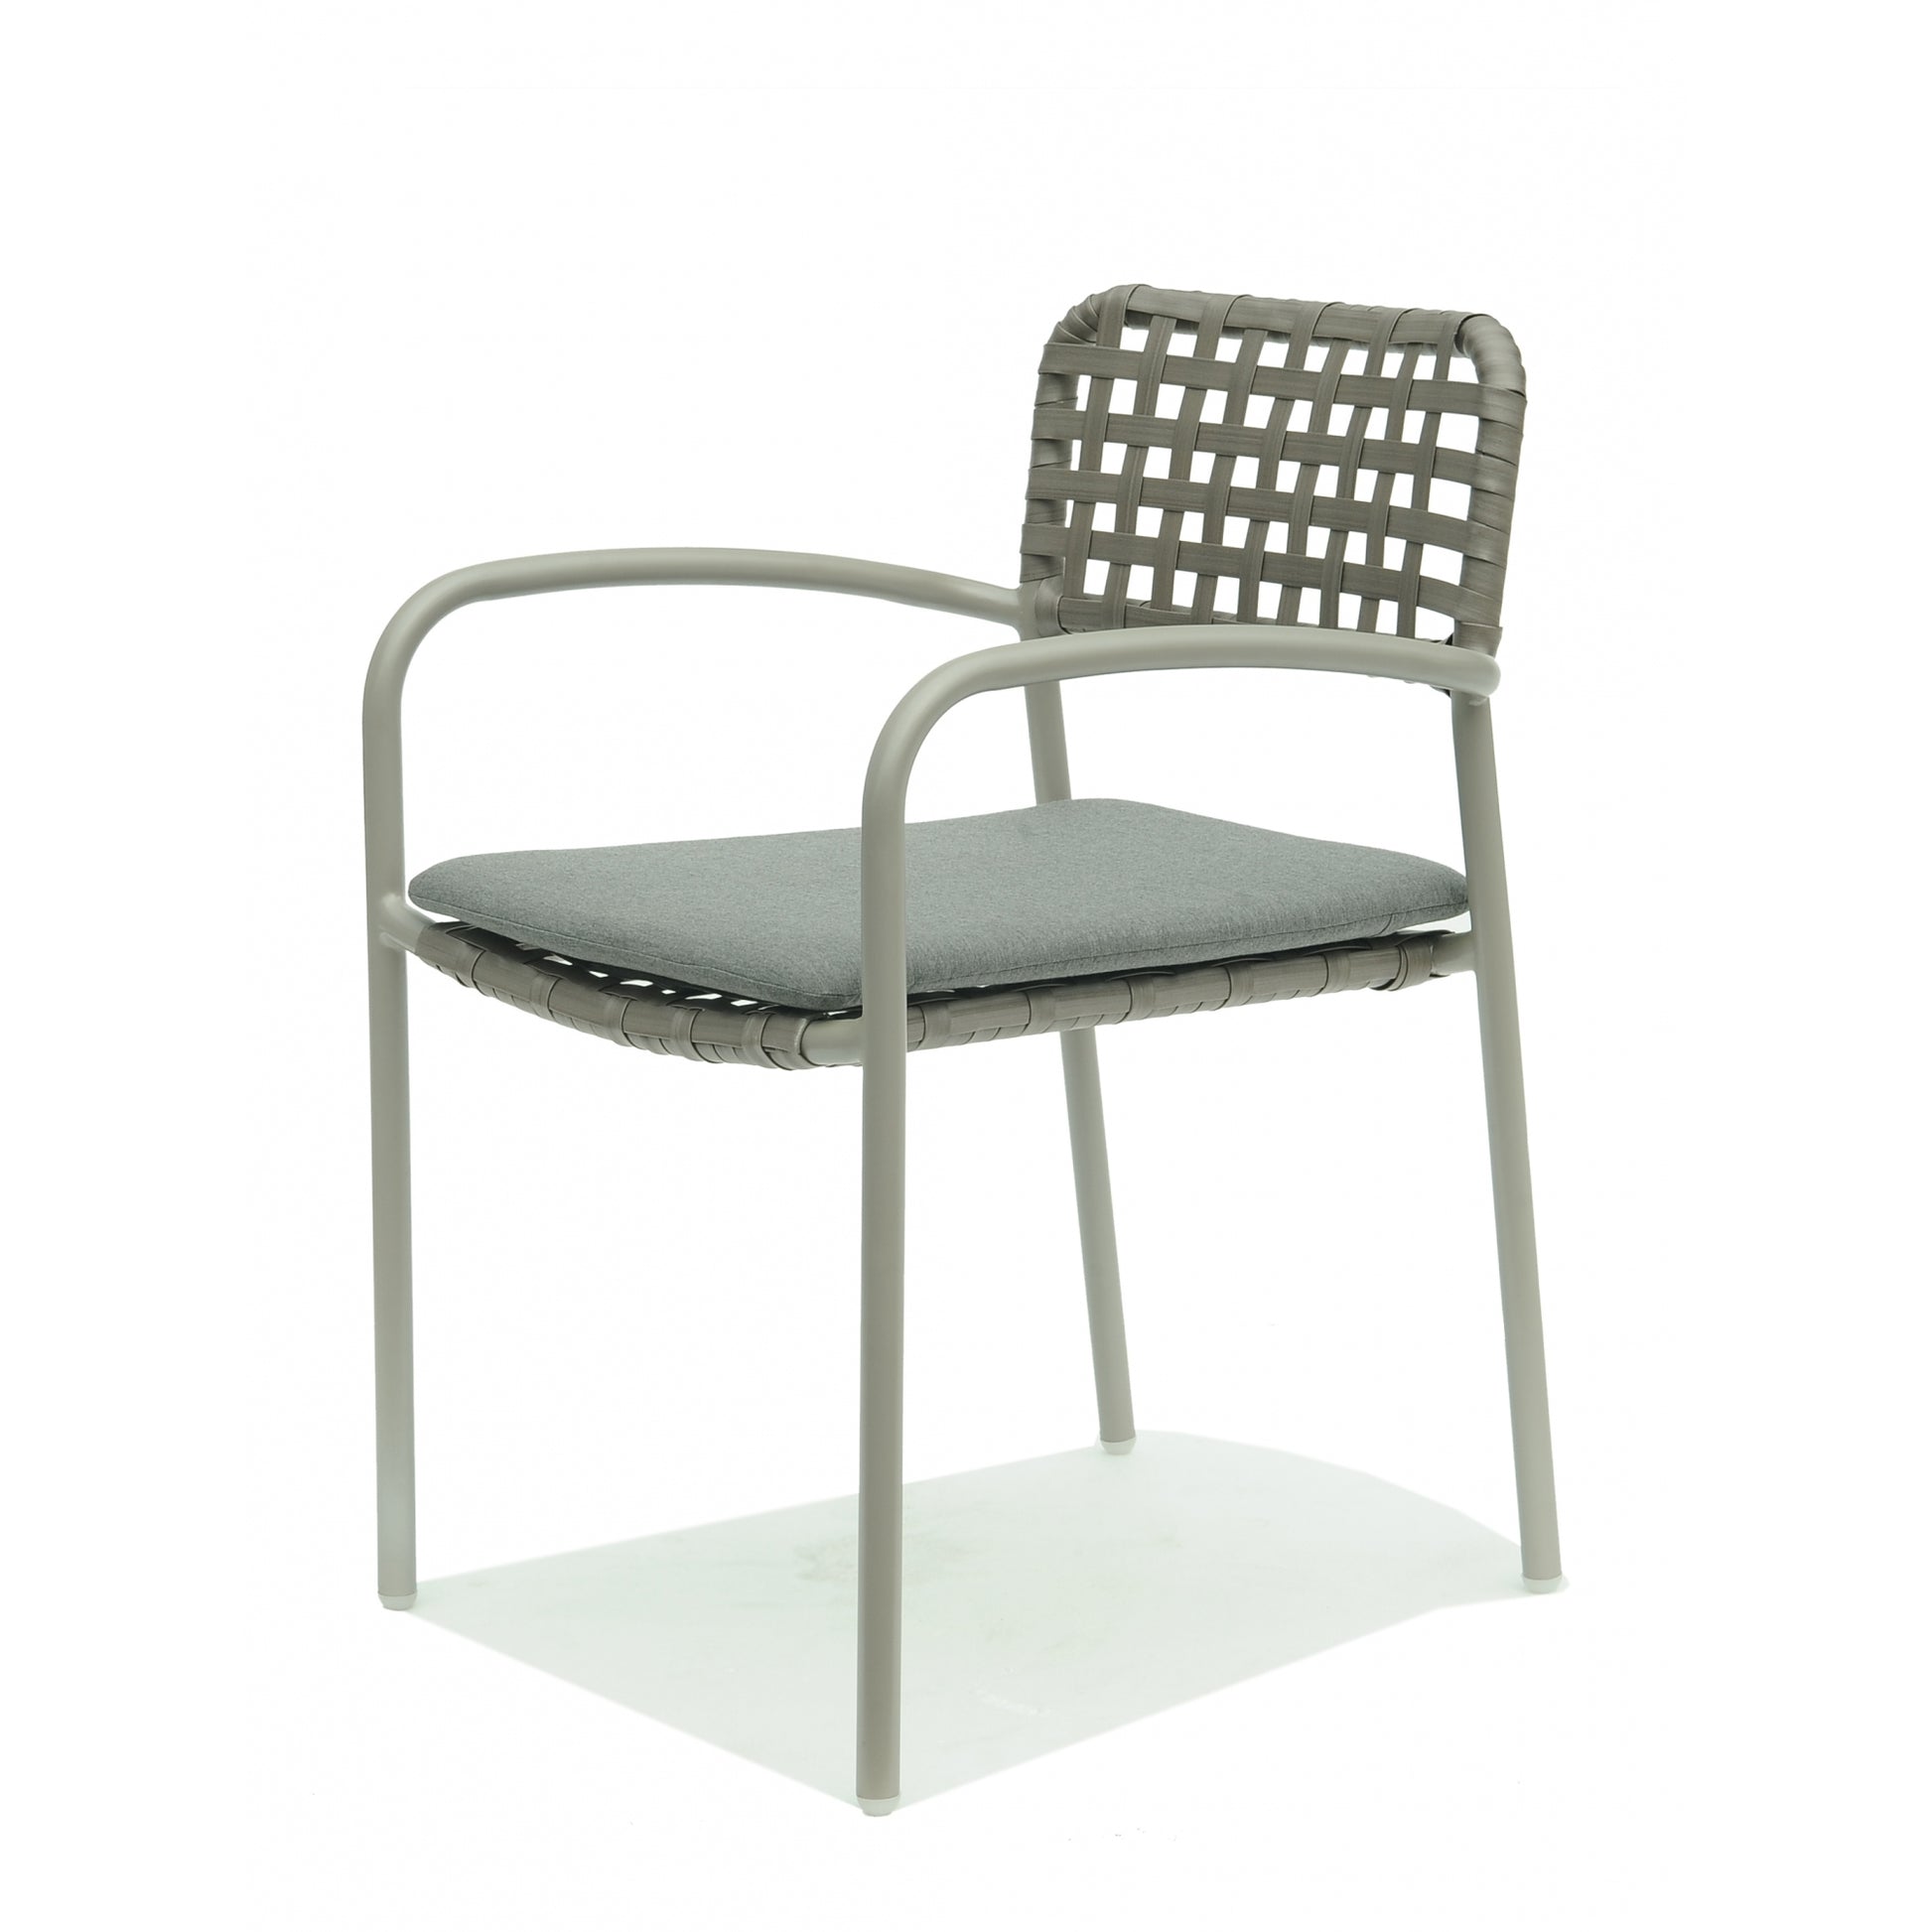 Catania Silver Walnut Dining Chair - PadioLiving - Catania Silver Walnut Dining Chair - Outdoor Dining Chair - Dark Grey 21mm Strap / Metal-Perla(£262) - PadioLiving